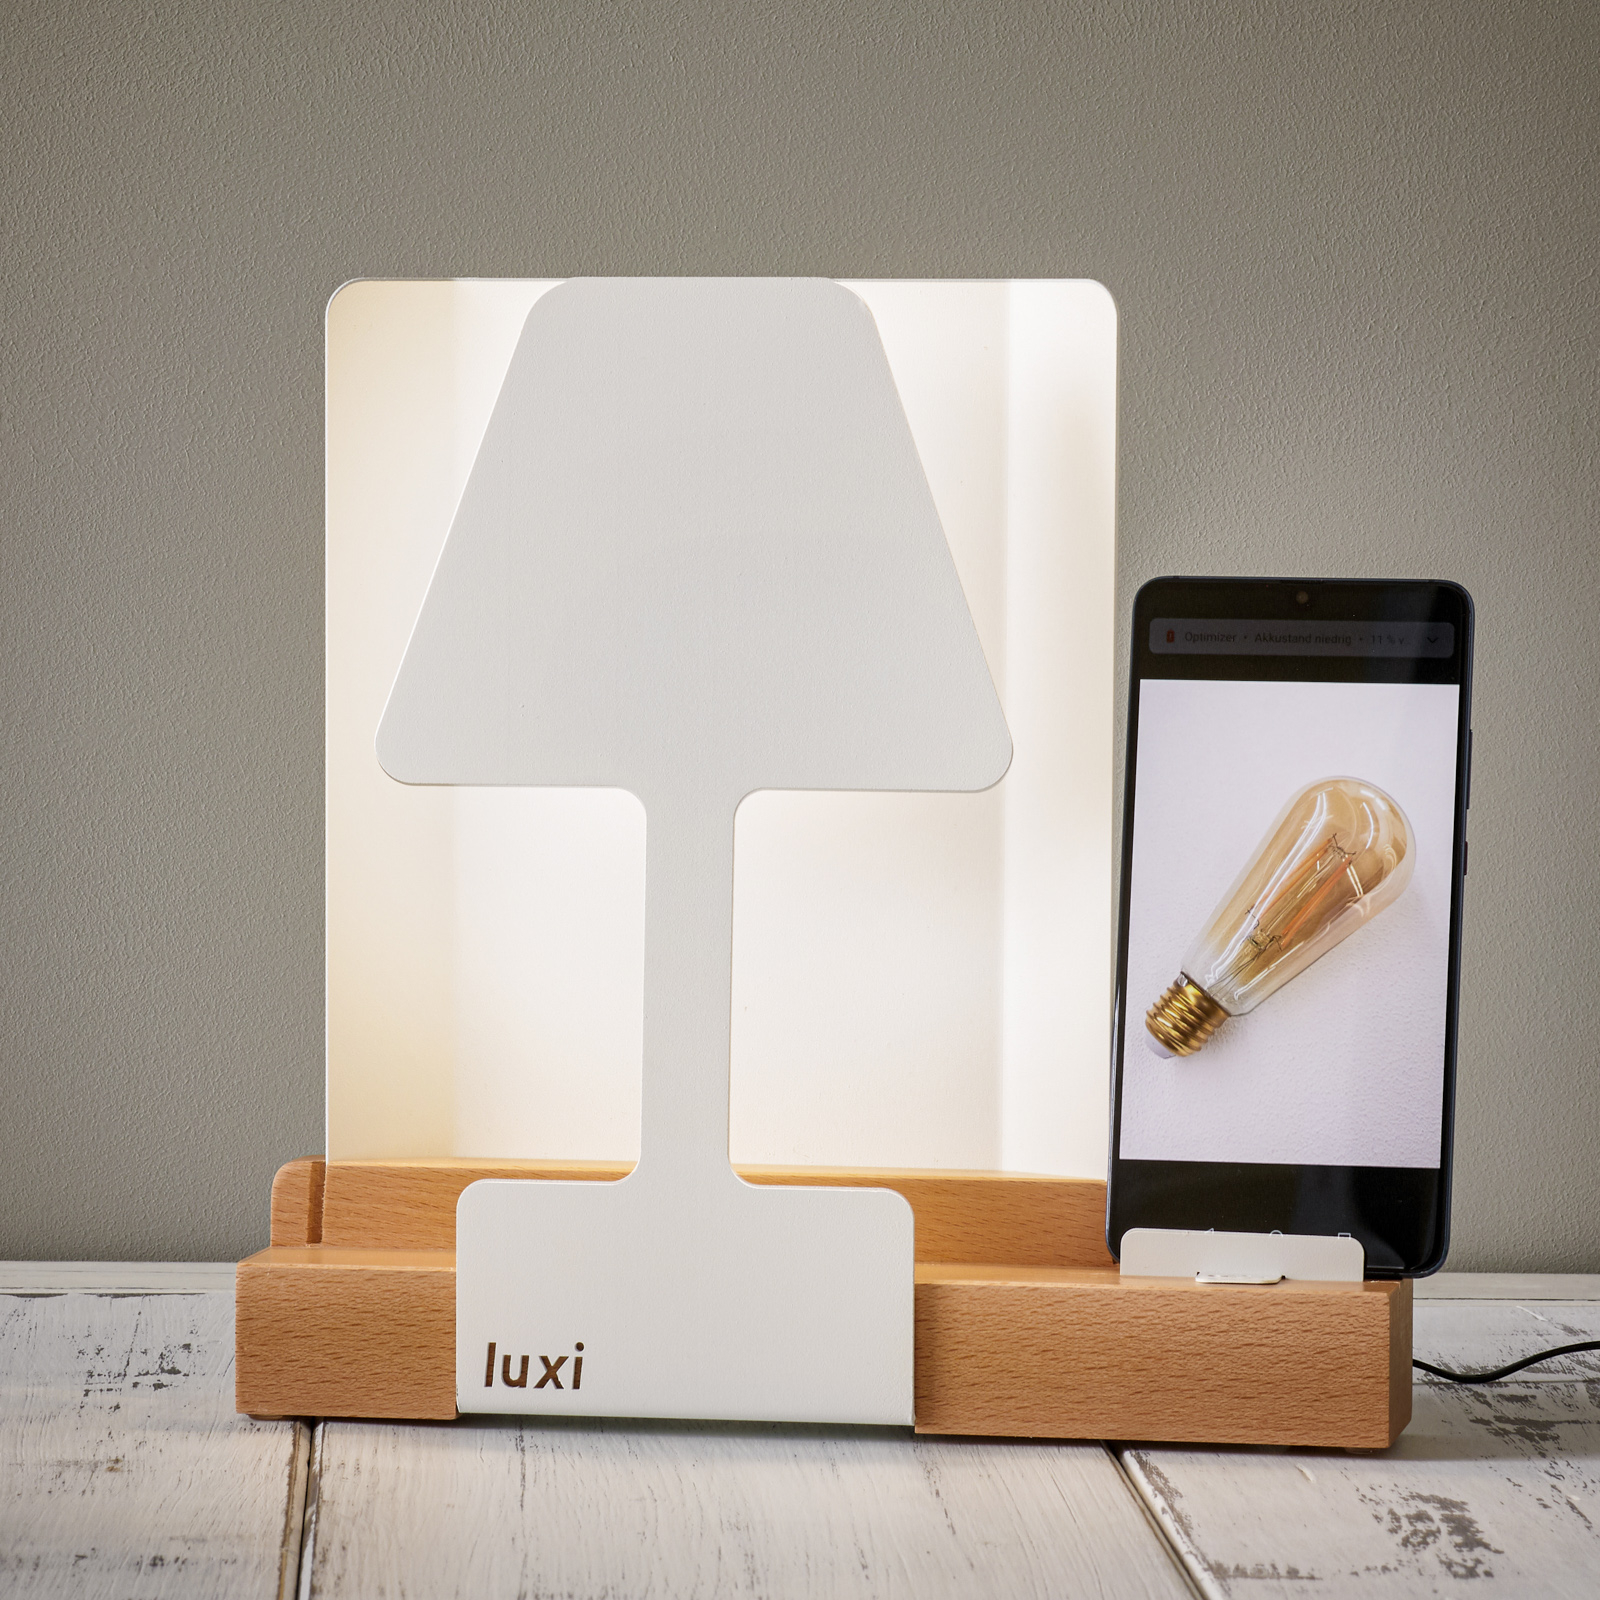 LED-bordslampa Luxi med integrerad laddstation